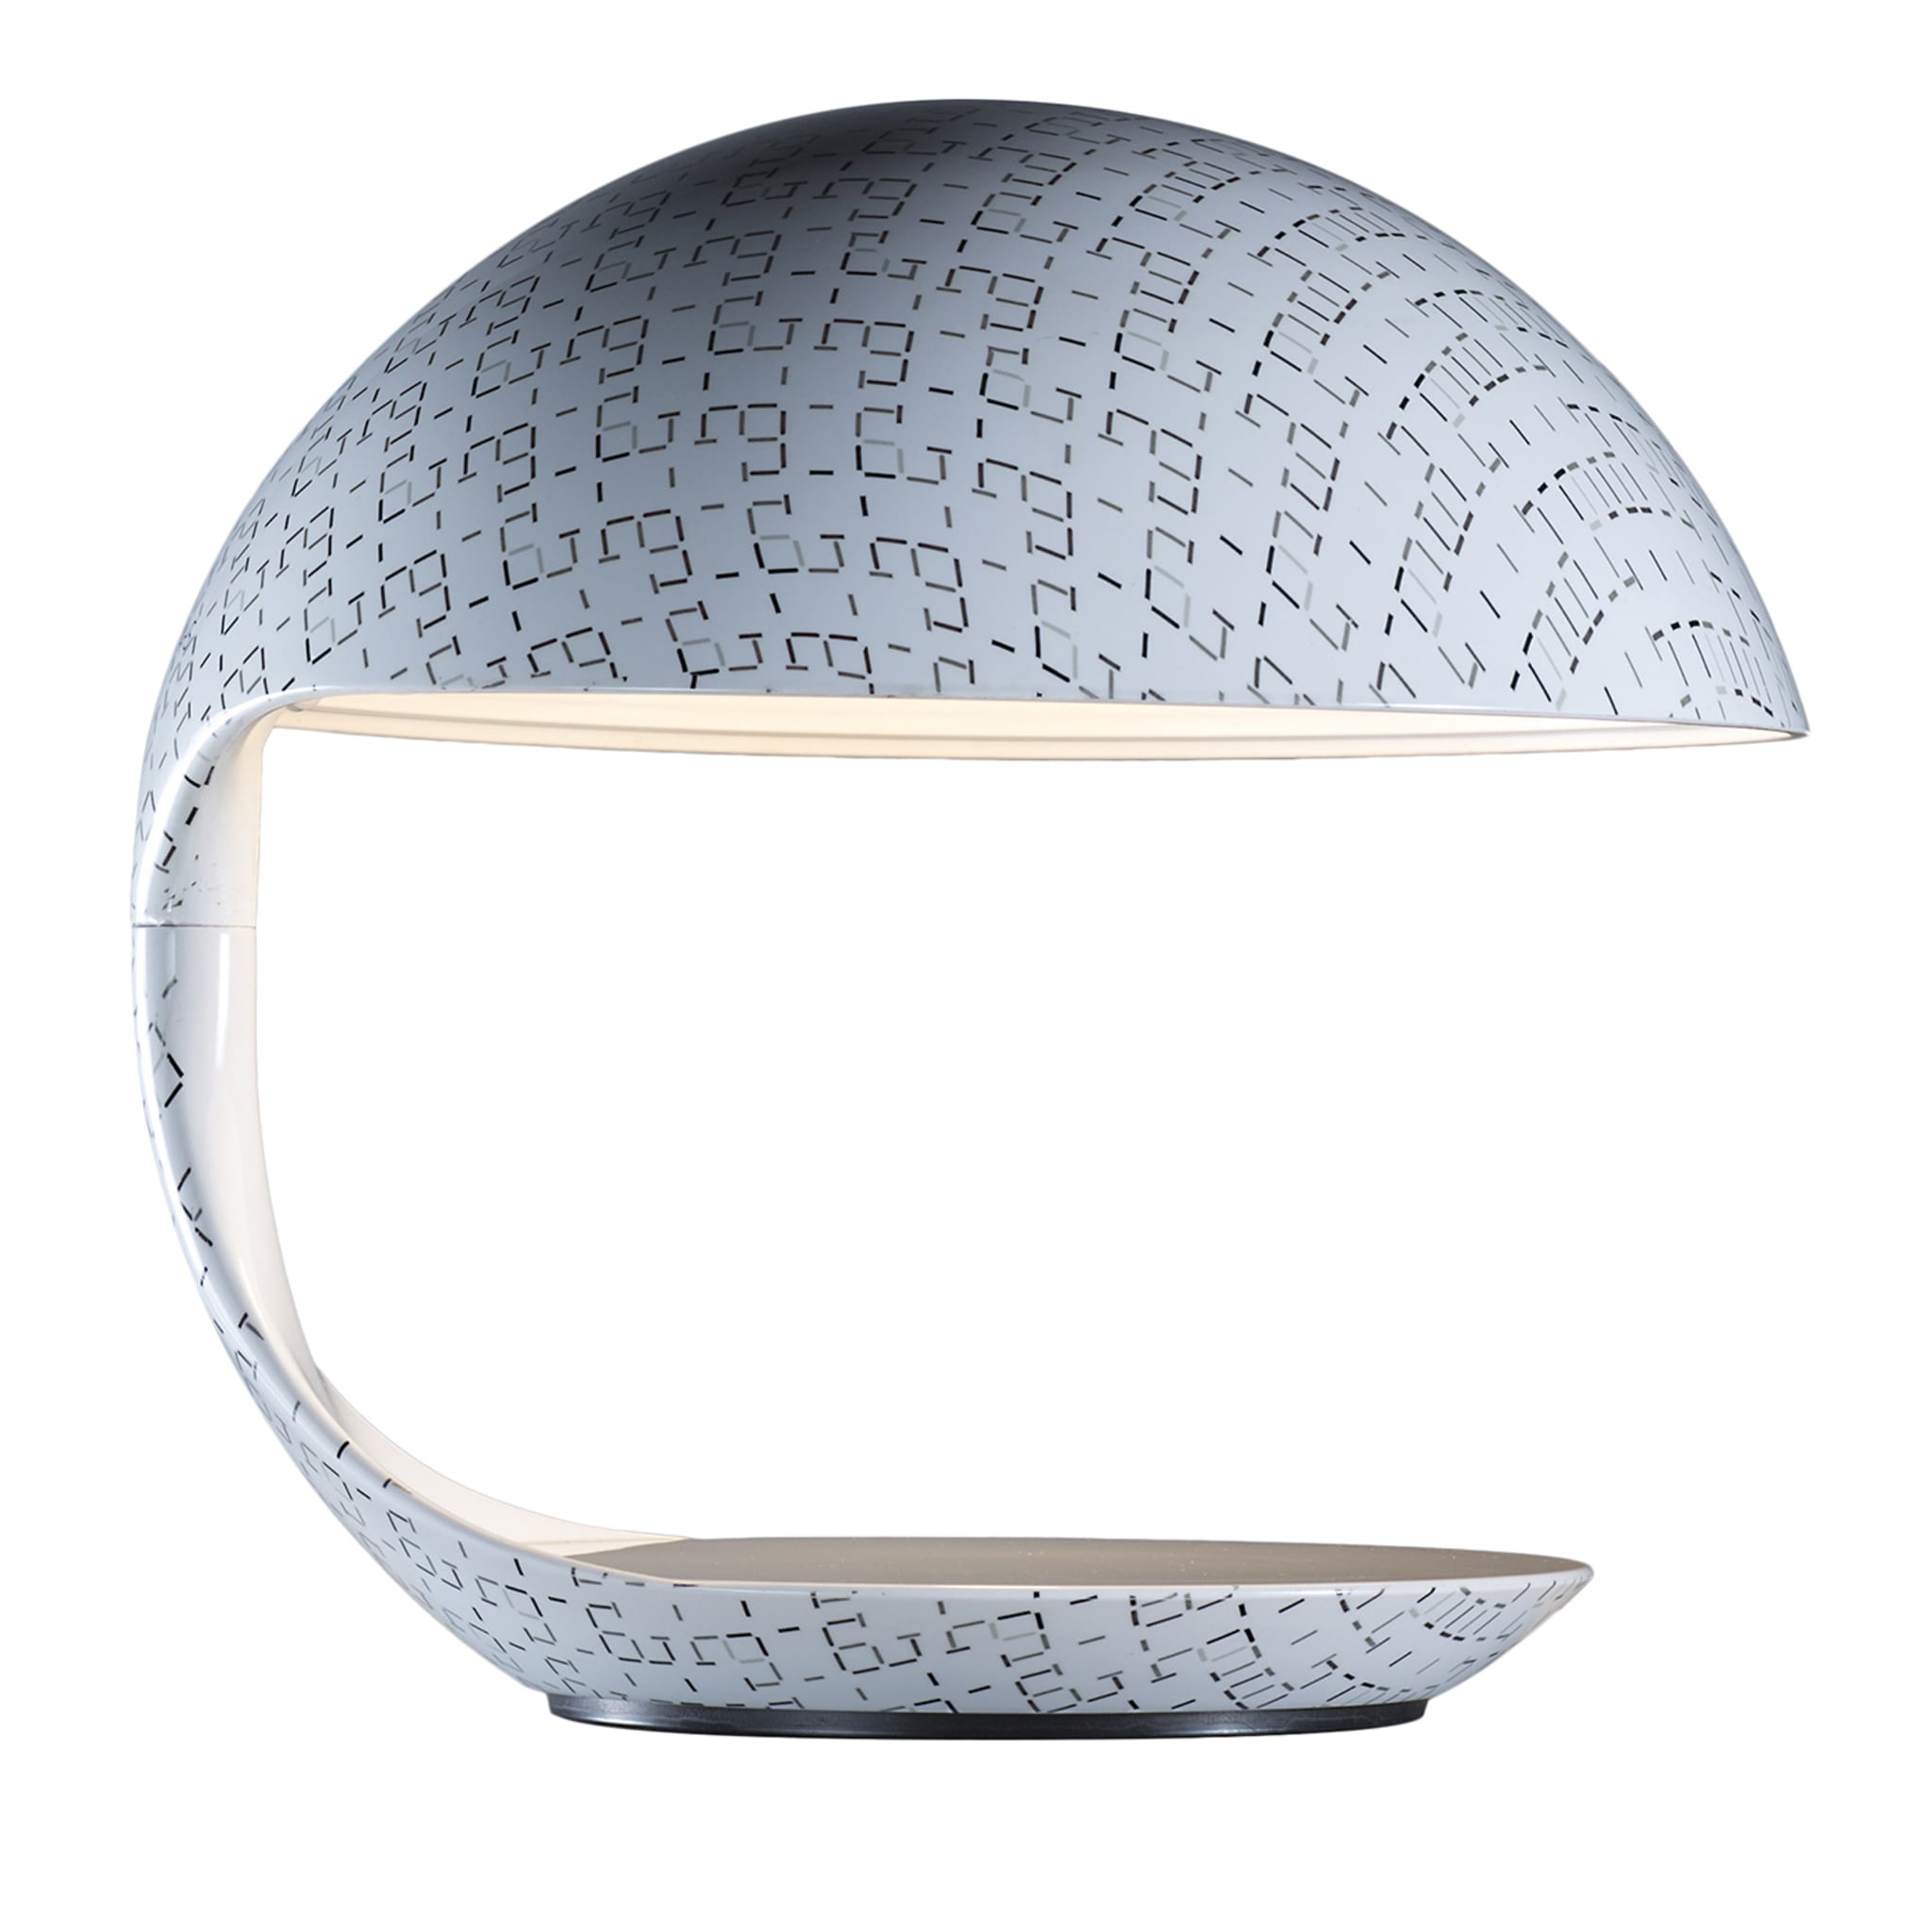 Cobra Texture Skin Table Lamp by Adolini Simonini - Main view